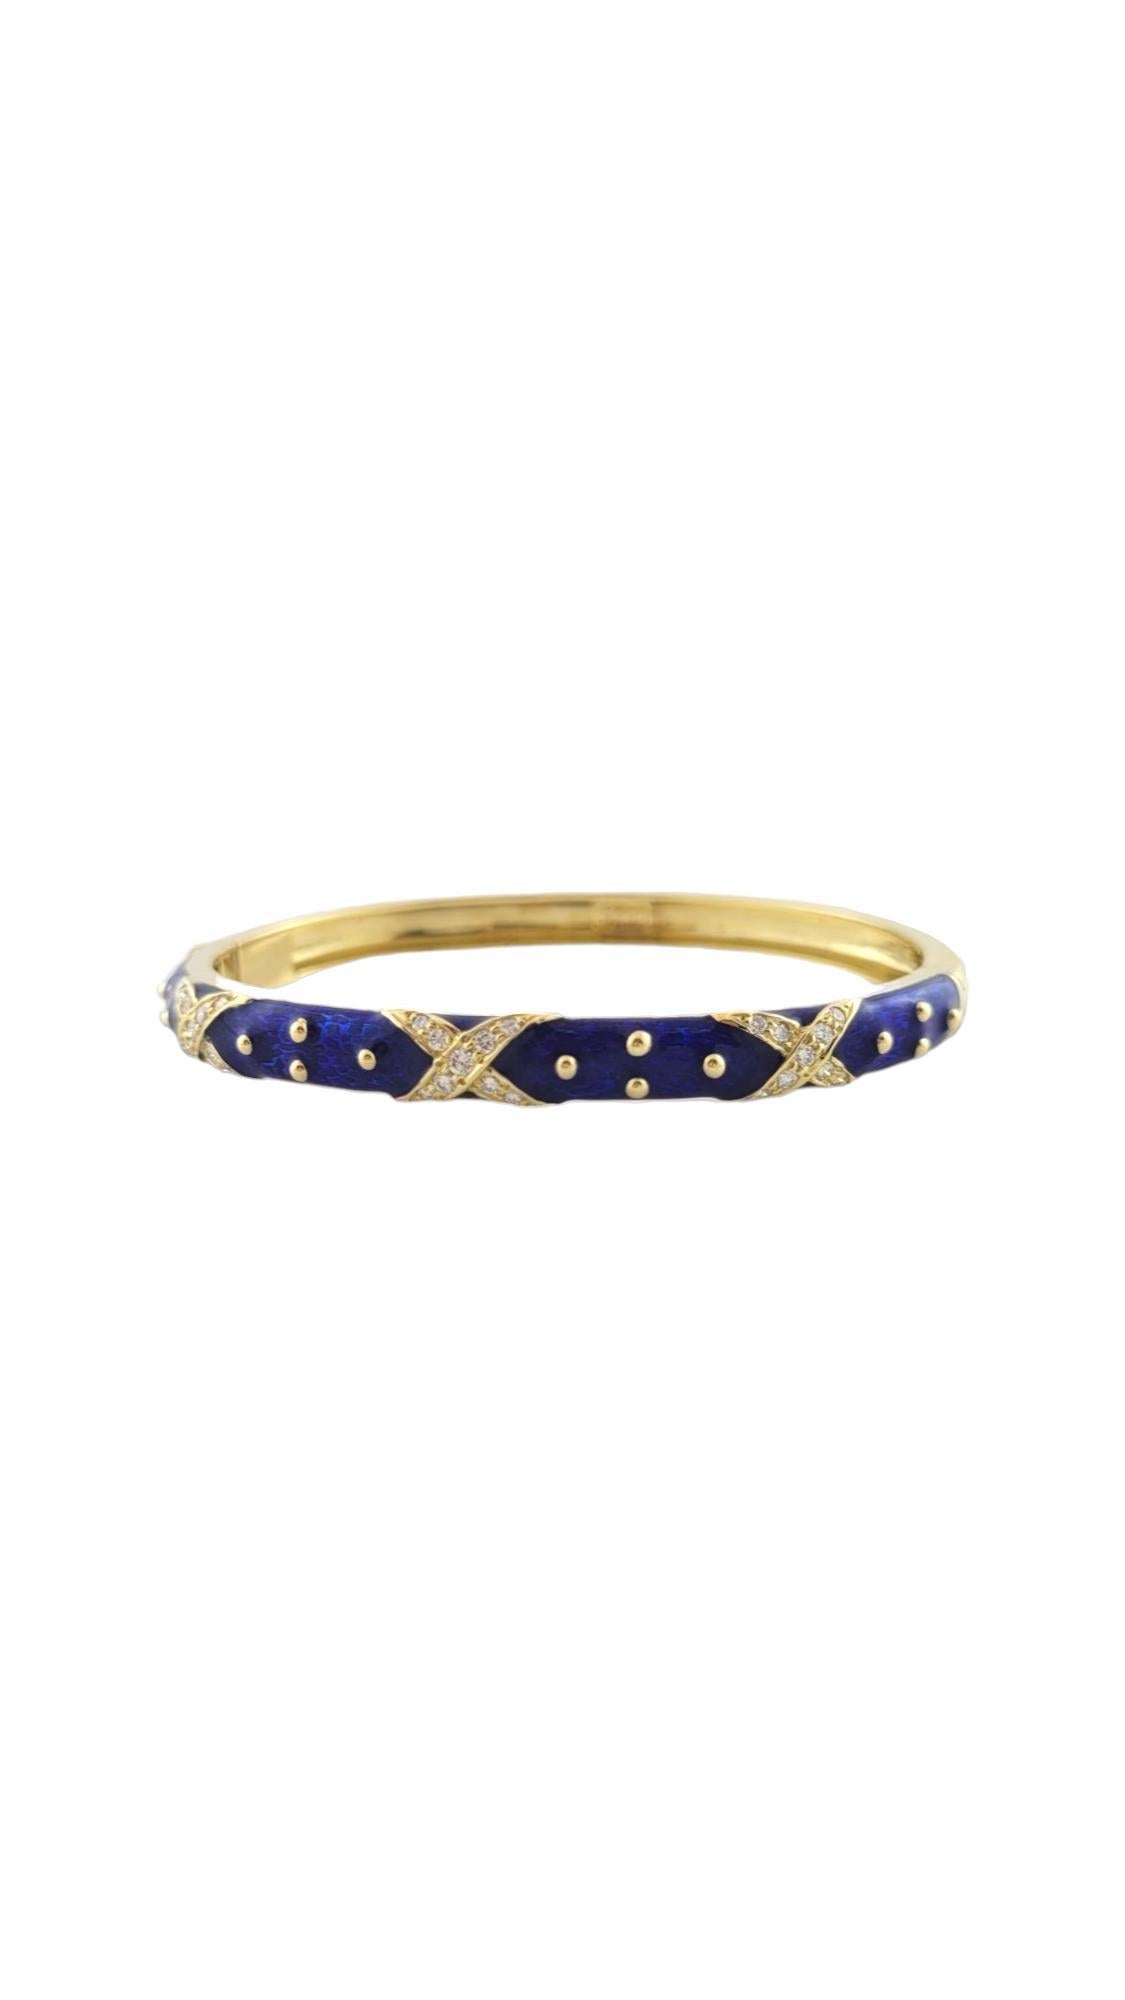 Hidalgo 18K Yellow Gold Blue Enamel Diamond X Hinged Bangle Bracelet

Hinged bangle bracelet in 18 karat yellow gold with diamond 